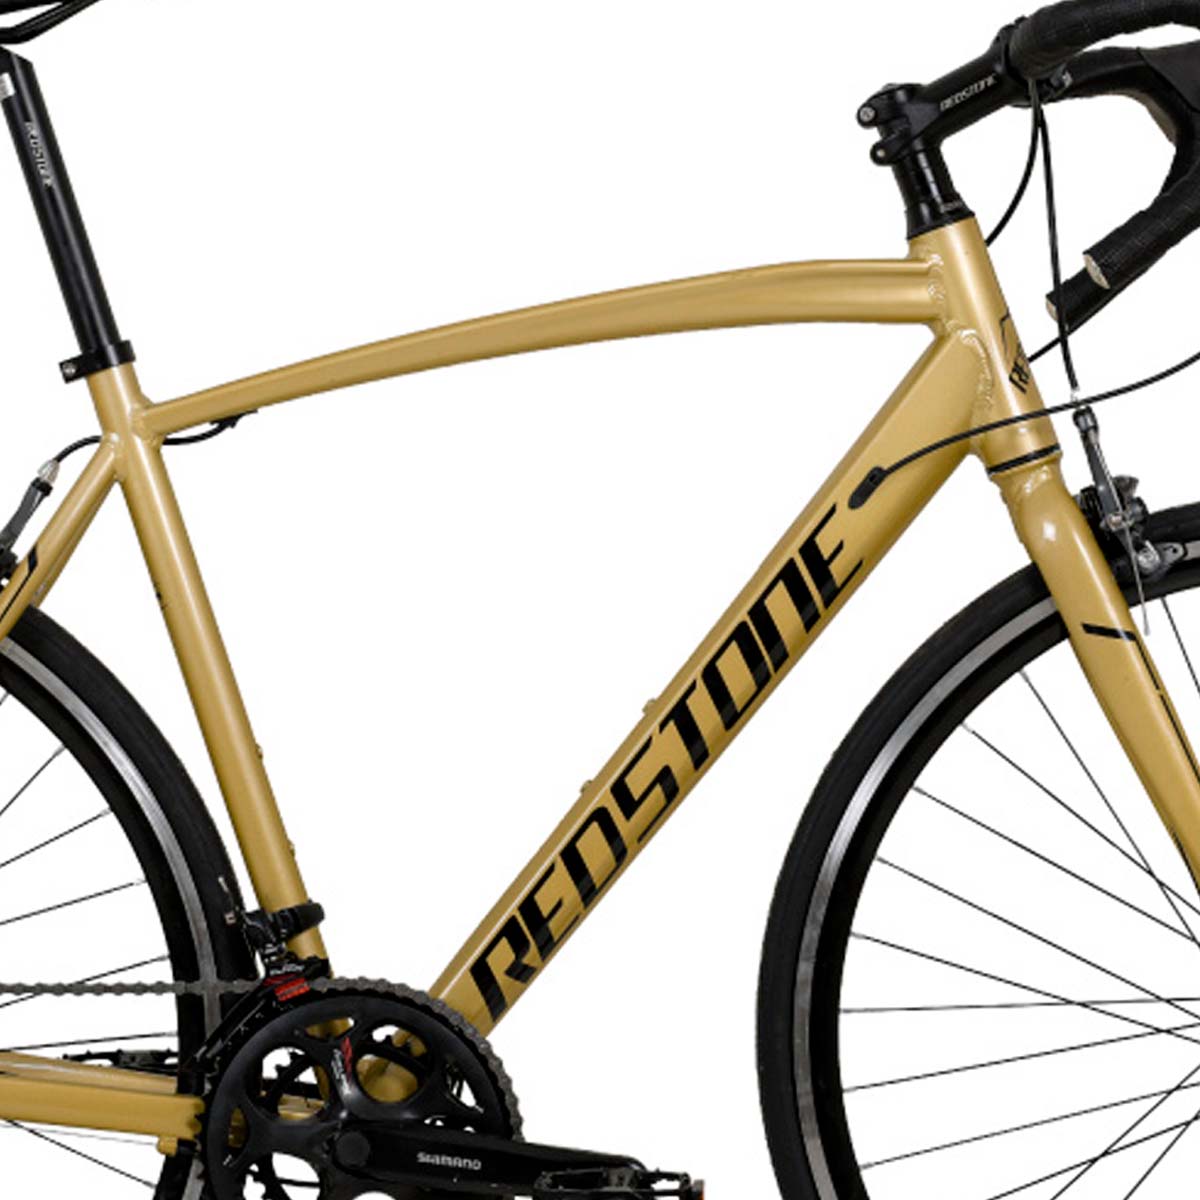 Bicicleta Redstone Snake Speed Aro 700 Shimano Tourney 14V Dourada 21